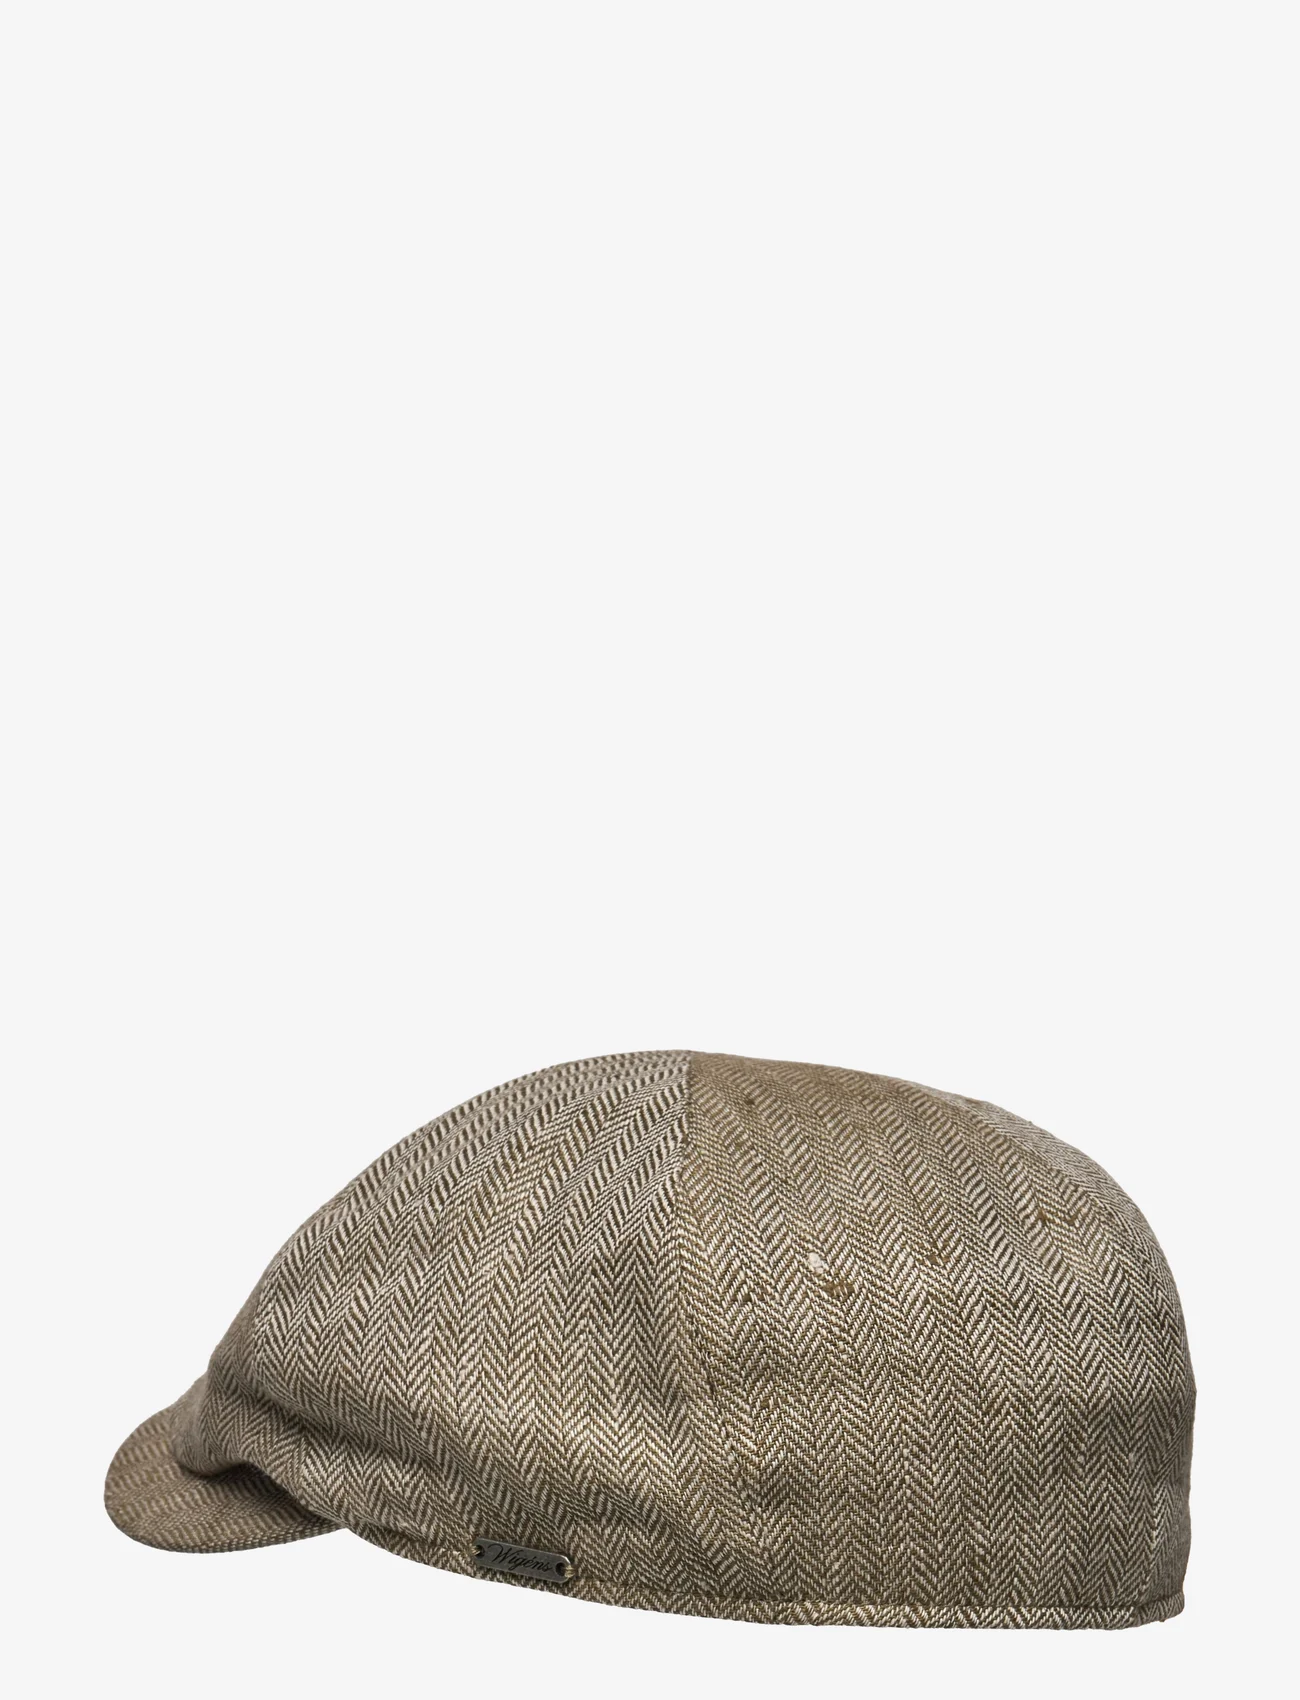 Wigéns - Newsboy Slim Cap - flat cap -hatut - olive - 1